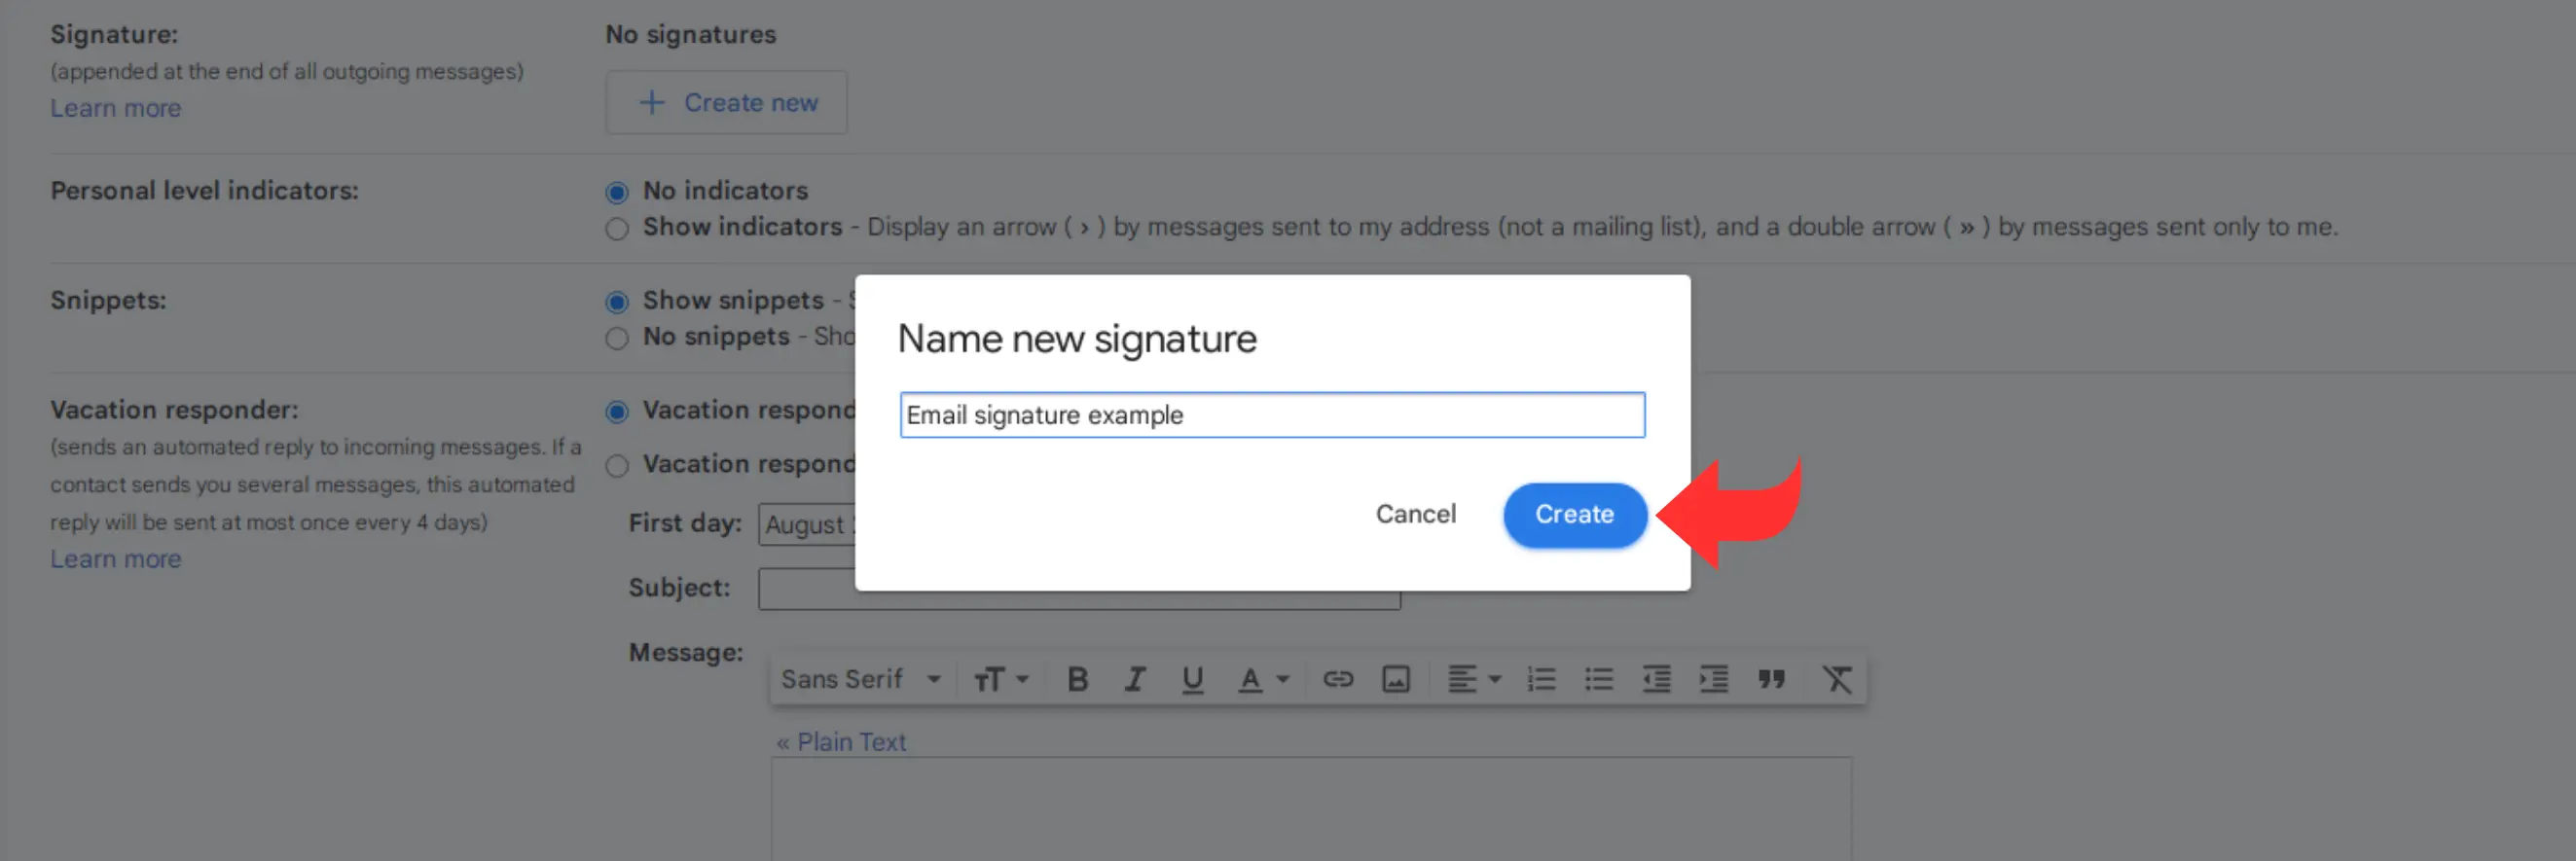 new-name-signature-gmail-create